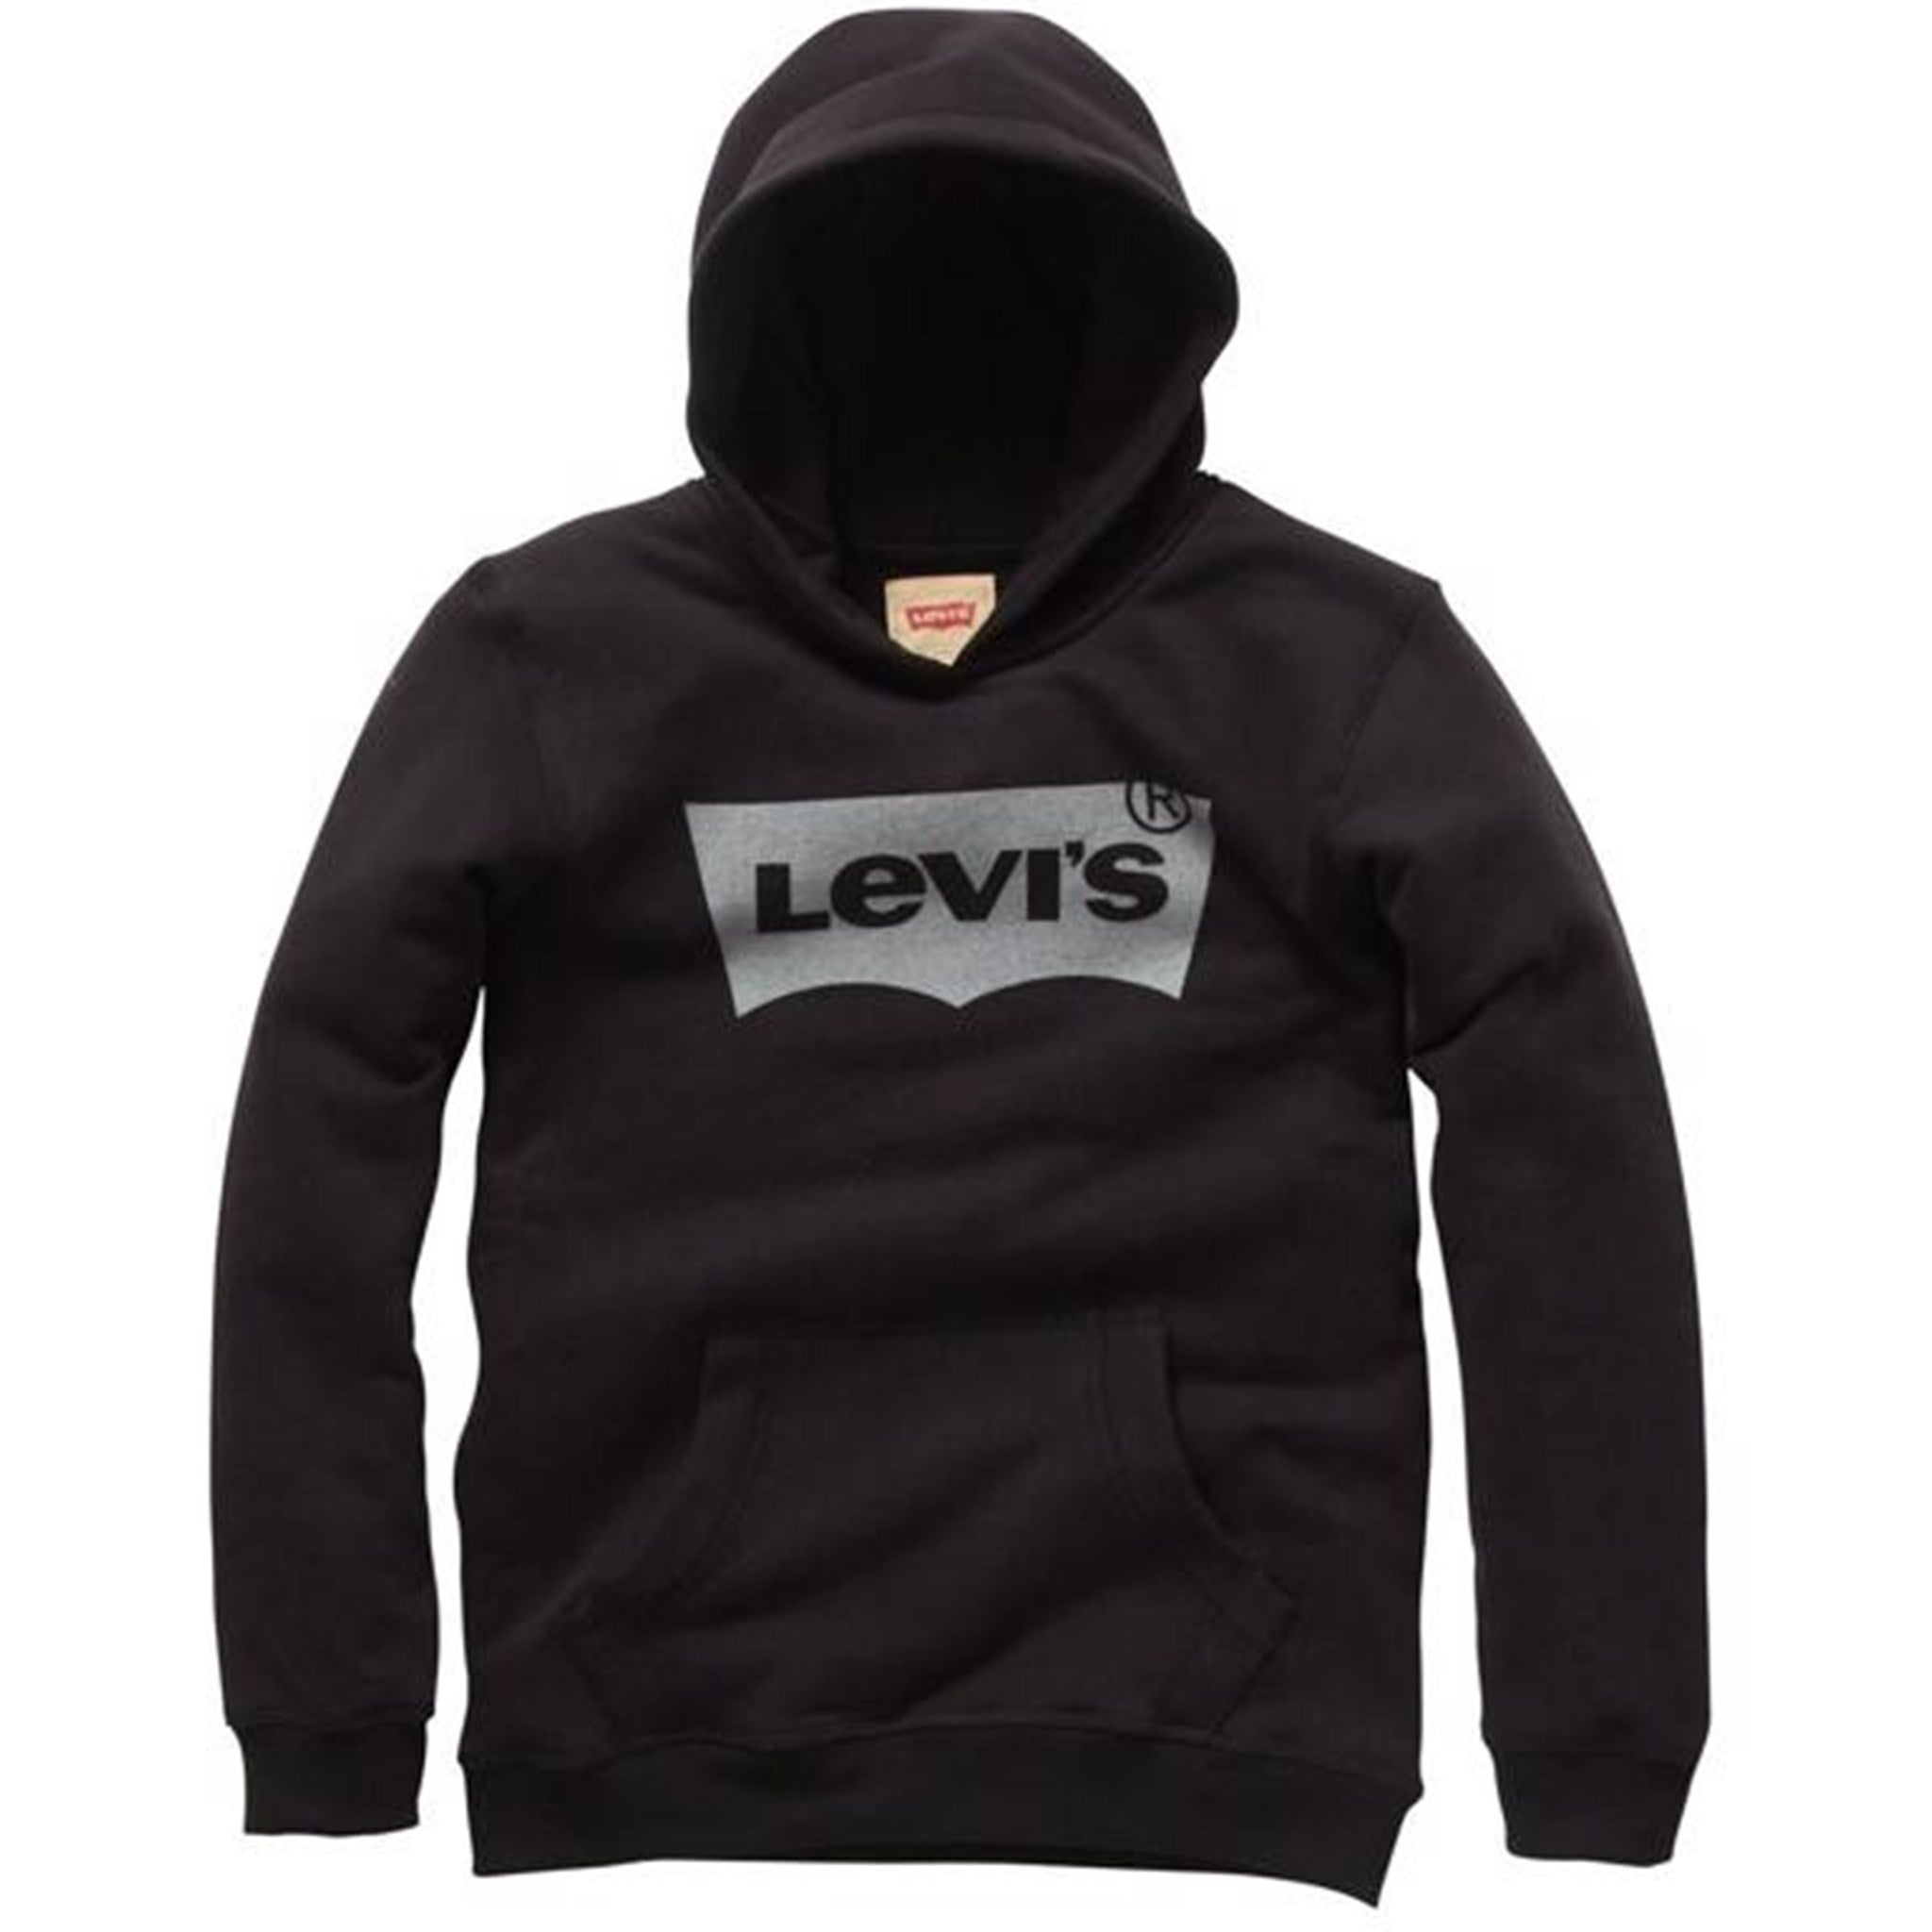 Levi's Sweat Bat N91503A Black